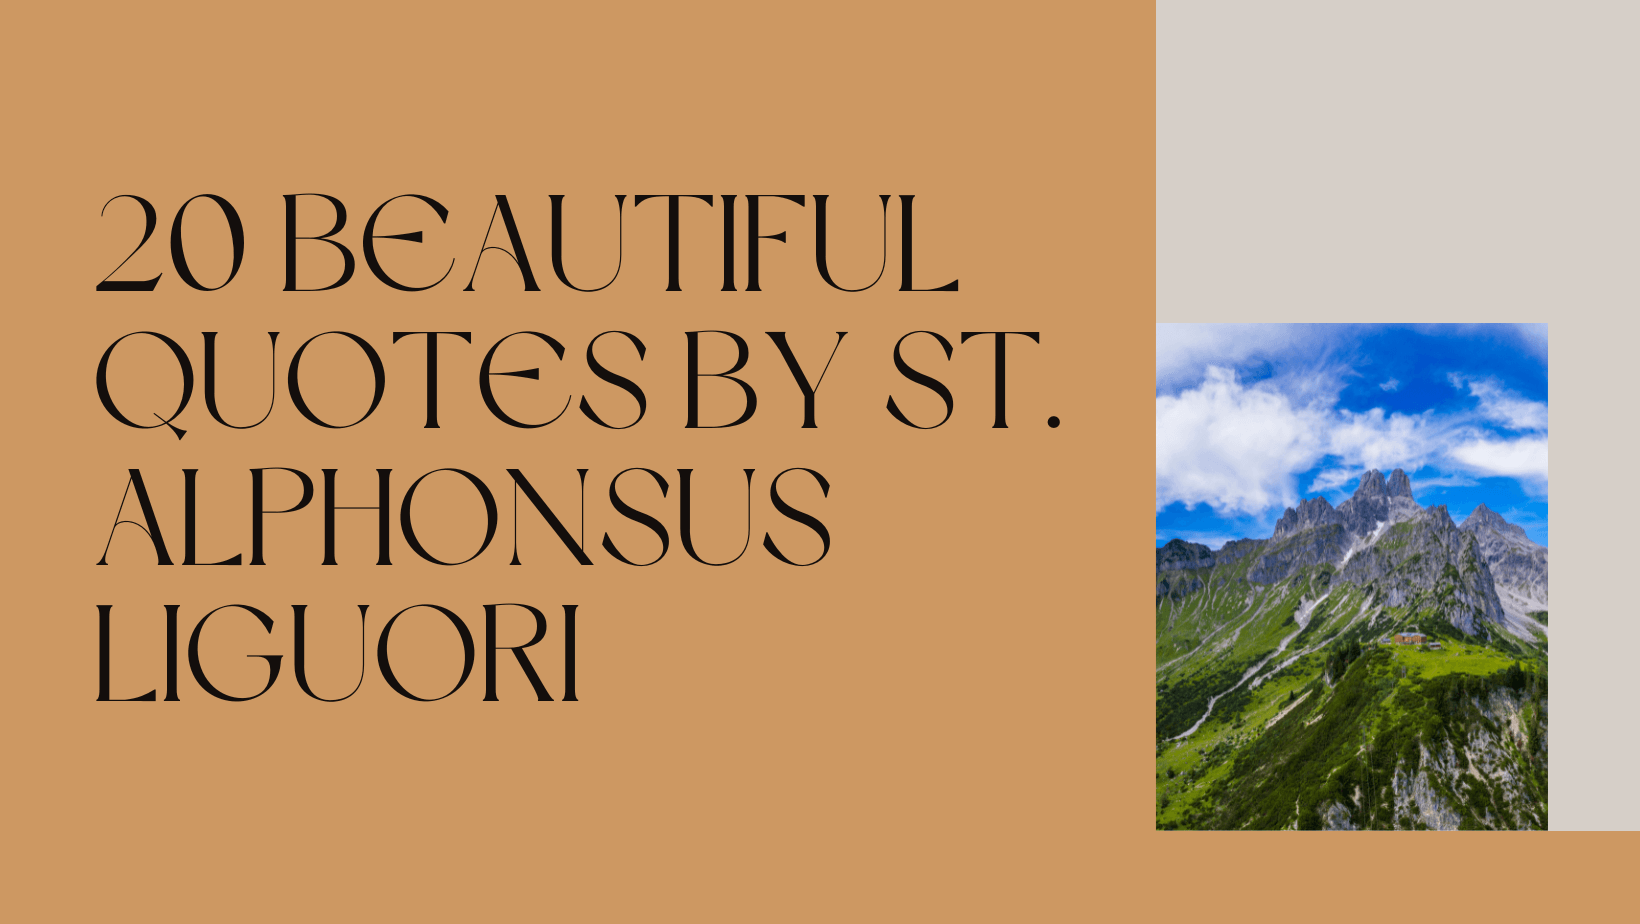 20 Beautiful Quotes by St. Alphonsus Liguori